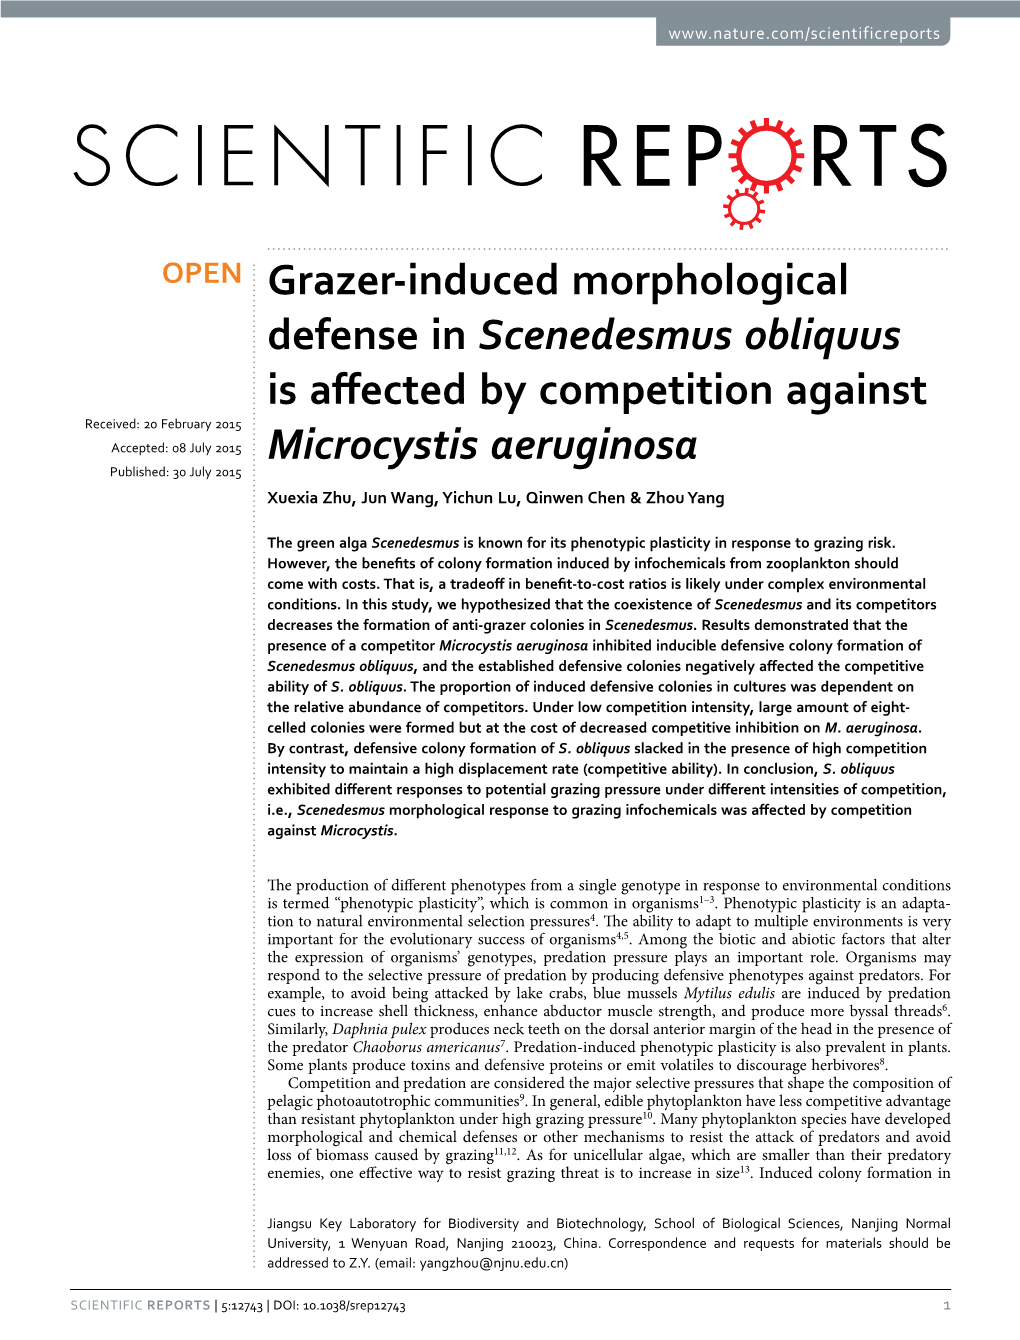 Grazer-Induced Morphological Defense in Scenedesmus Obliquus